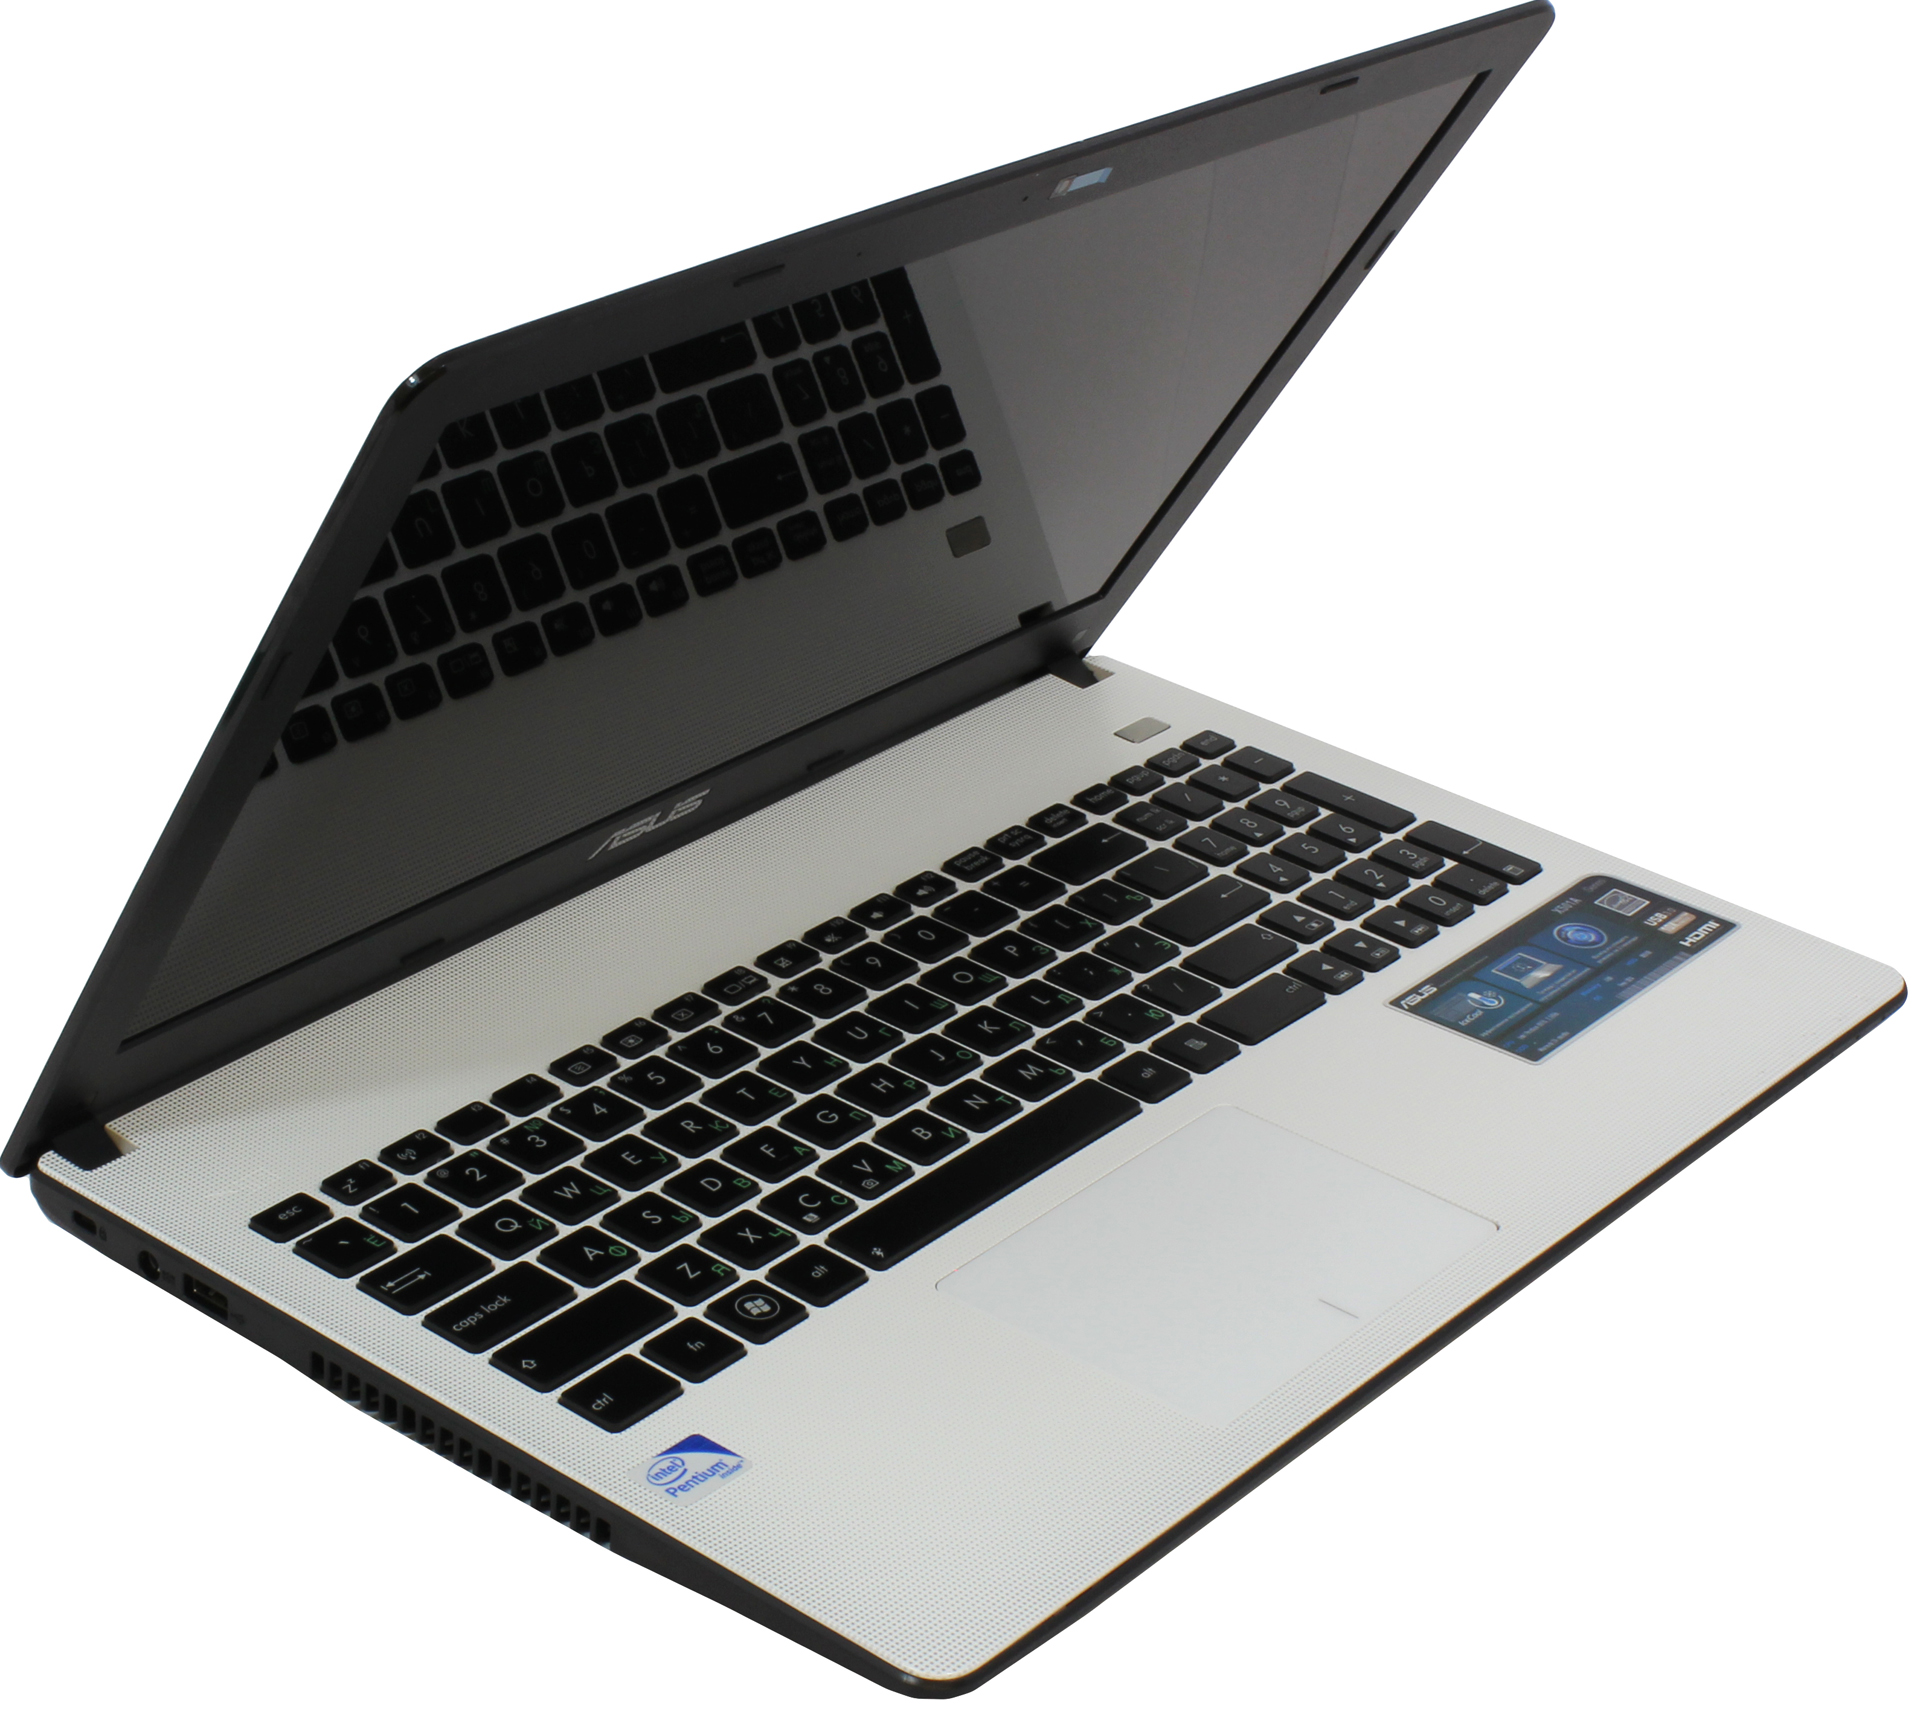 Ноутбуки без микрофона. Ноутбук ASUS белый. Ноутбук ASUS 2015 белый. Черный ноутбук с белой клавиатурой. Ноутбук Озон.